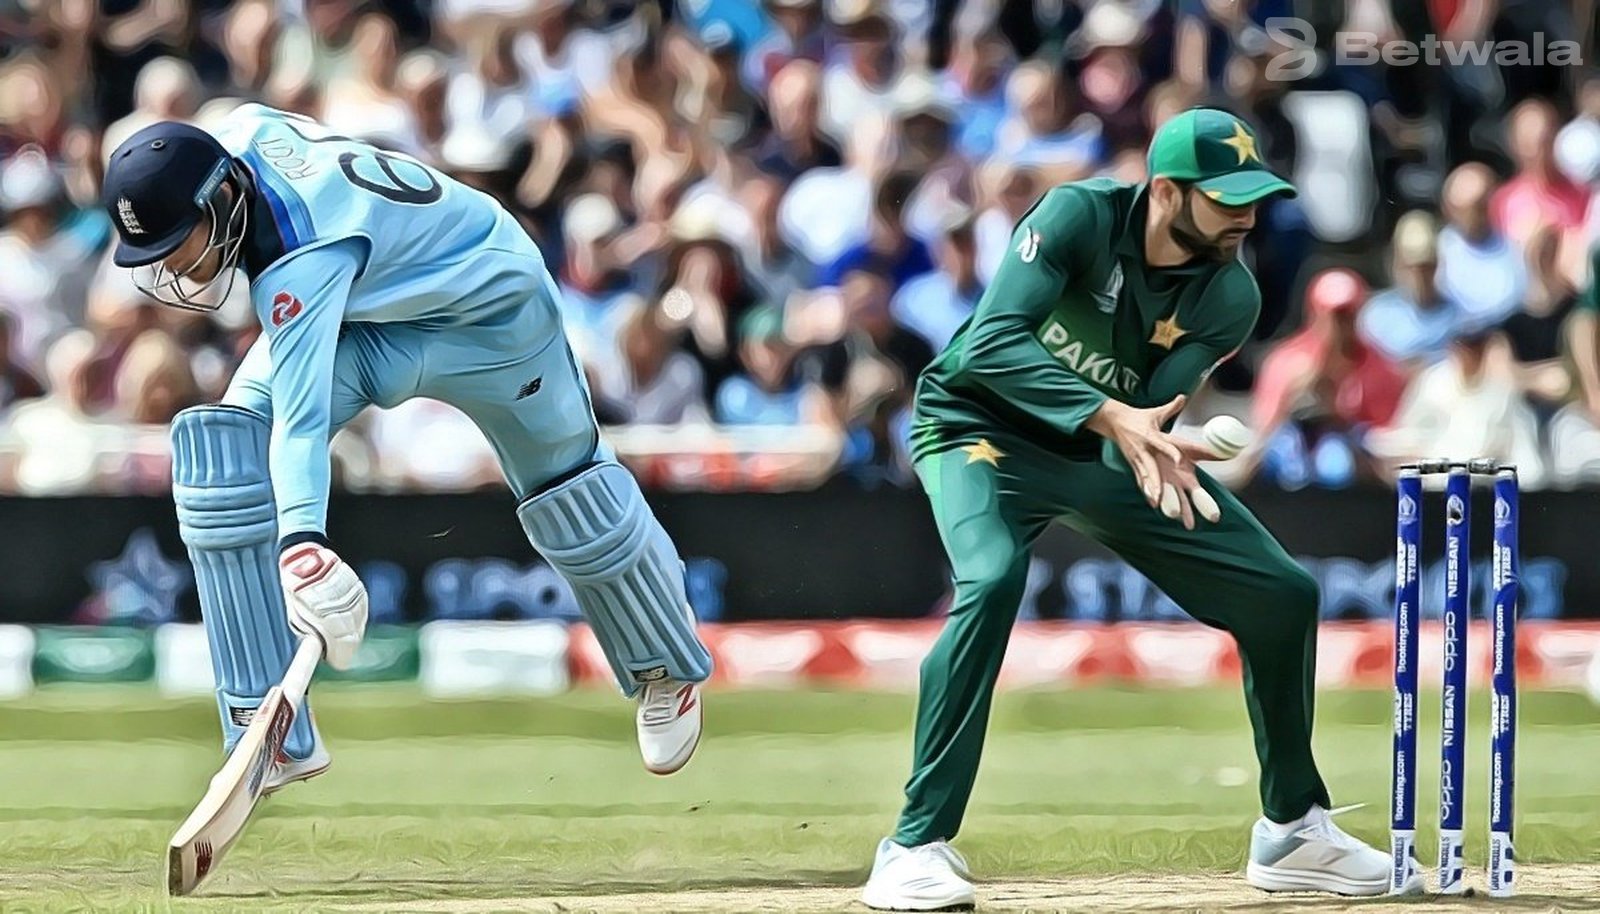 Live sports vs. Пакистан крикет. England vs Pakistan. T20 крикет. Крикет в Англии.